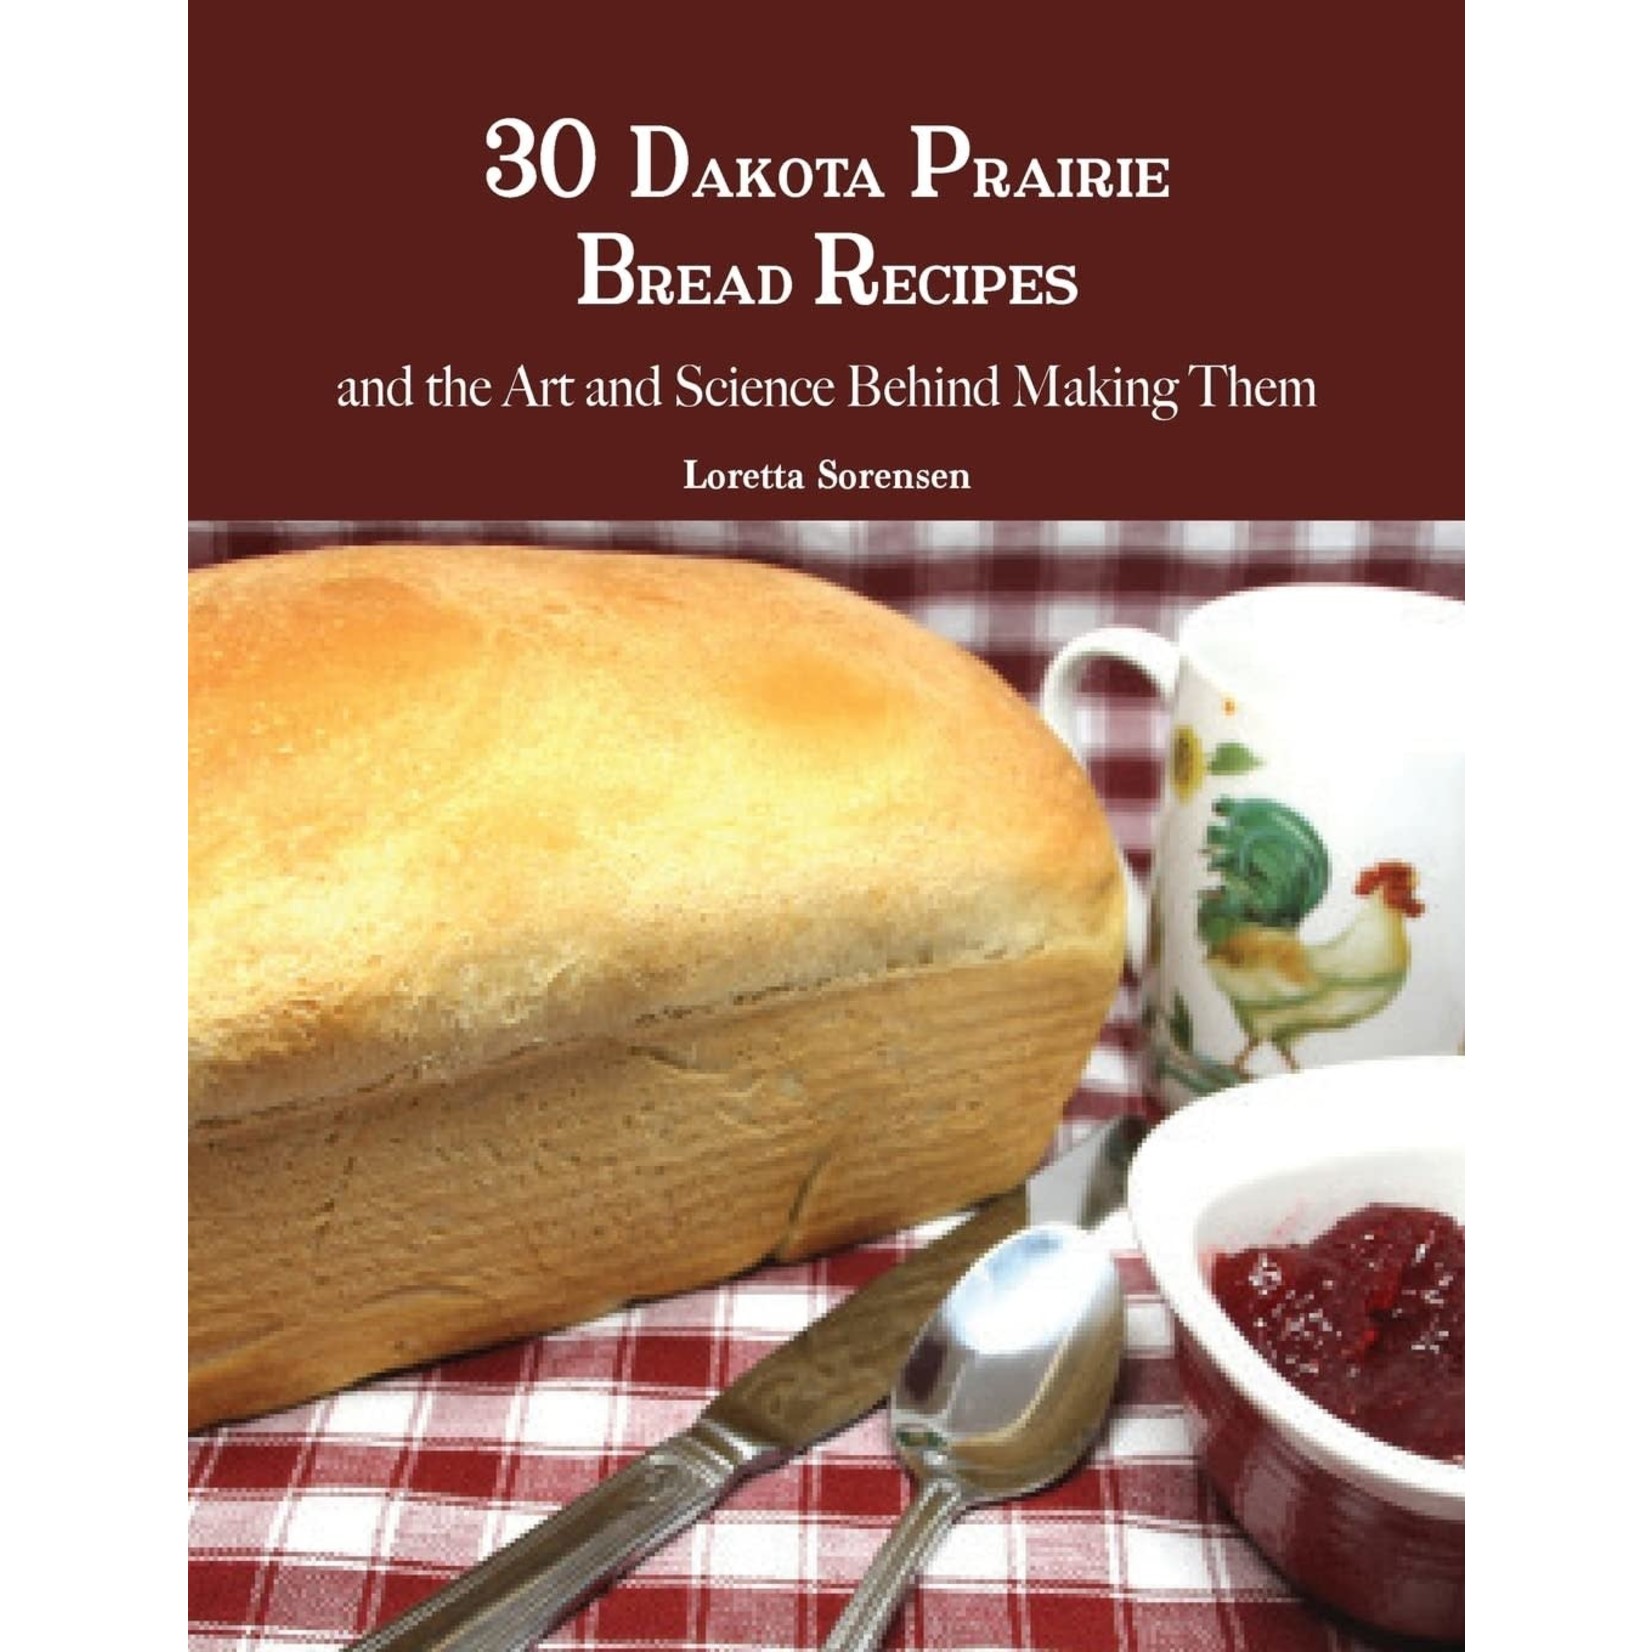 30 Dakota Prairie Bread Recipes by Loretta Sorenson